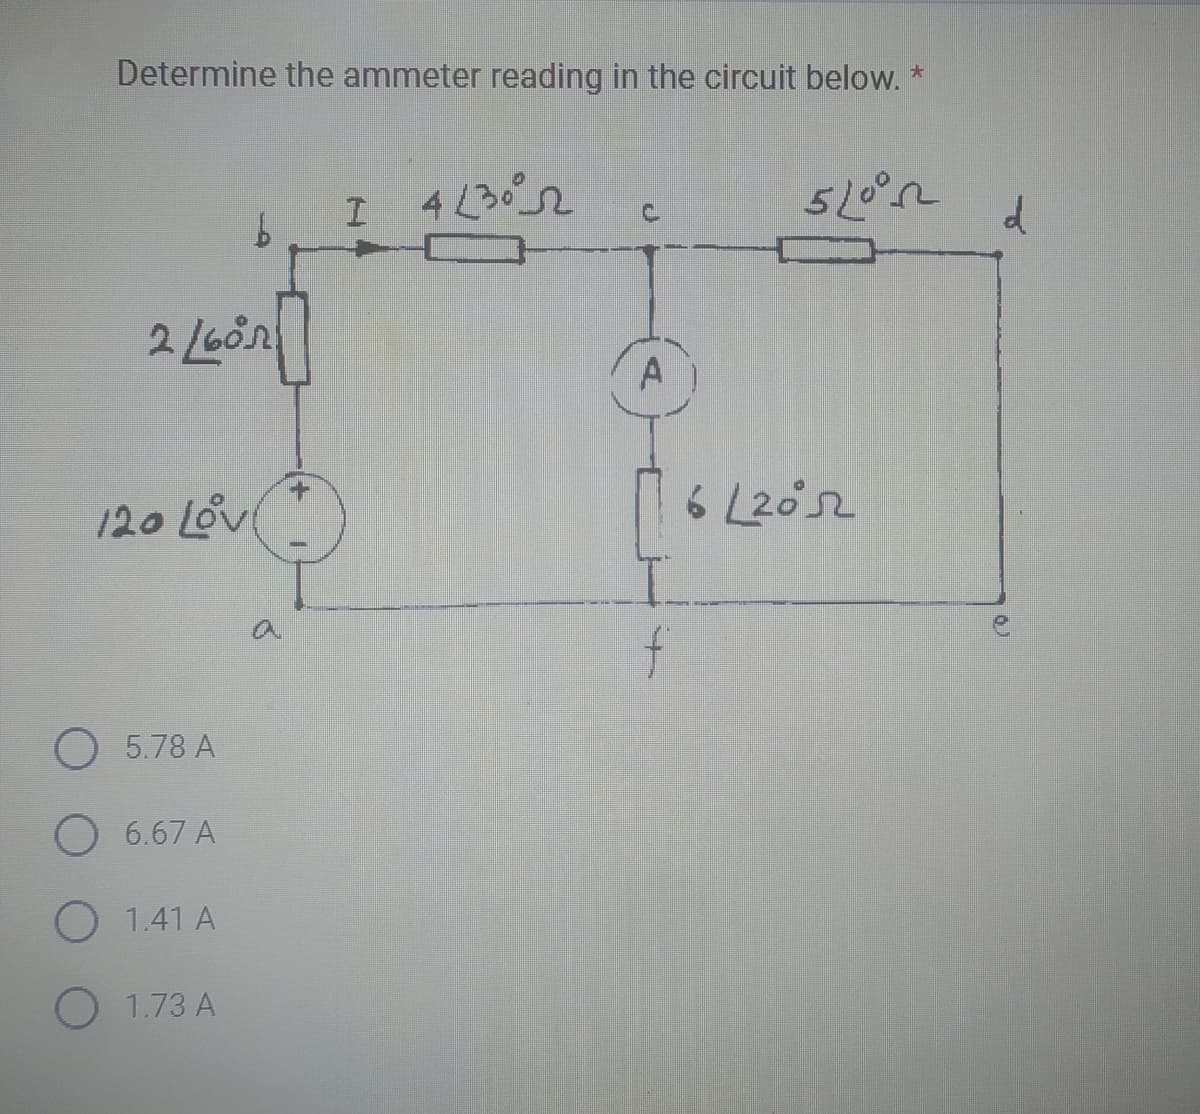 Determine the ammeter reading in the circuit below. *
2/601
b
120 Love
5.78 A
O 6.67 A
O 1.41 A
O 1.73 A
I 42302
A
f
5L0°
61205
d